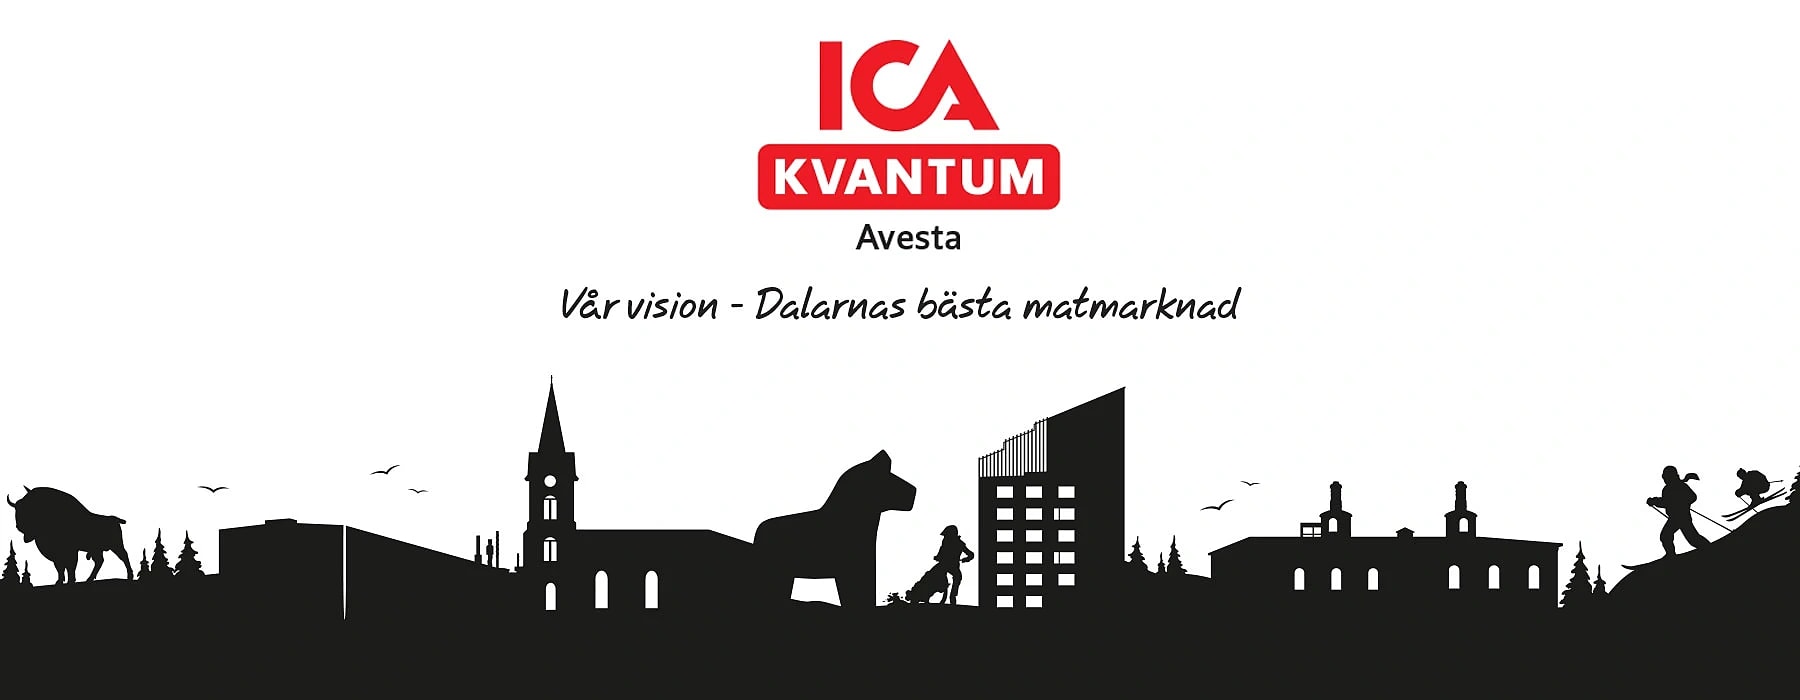 ICA Kvantum Avesta